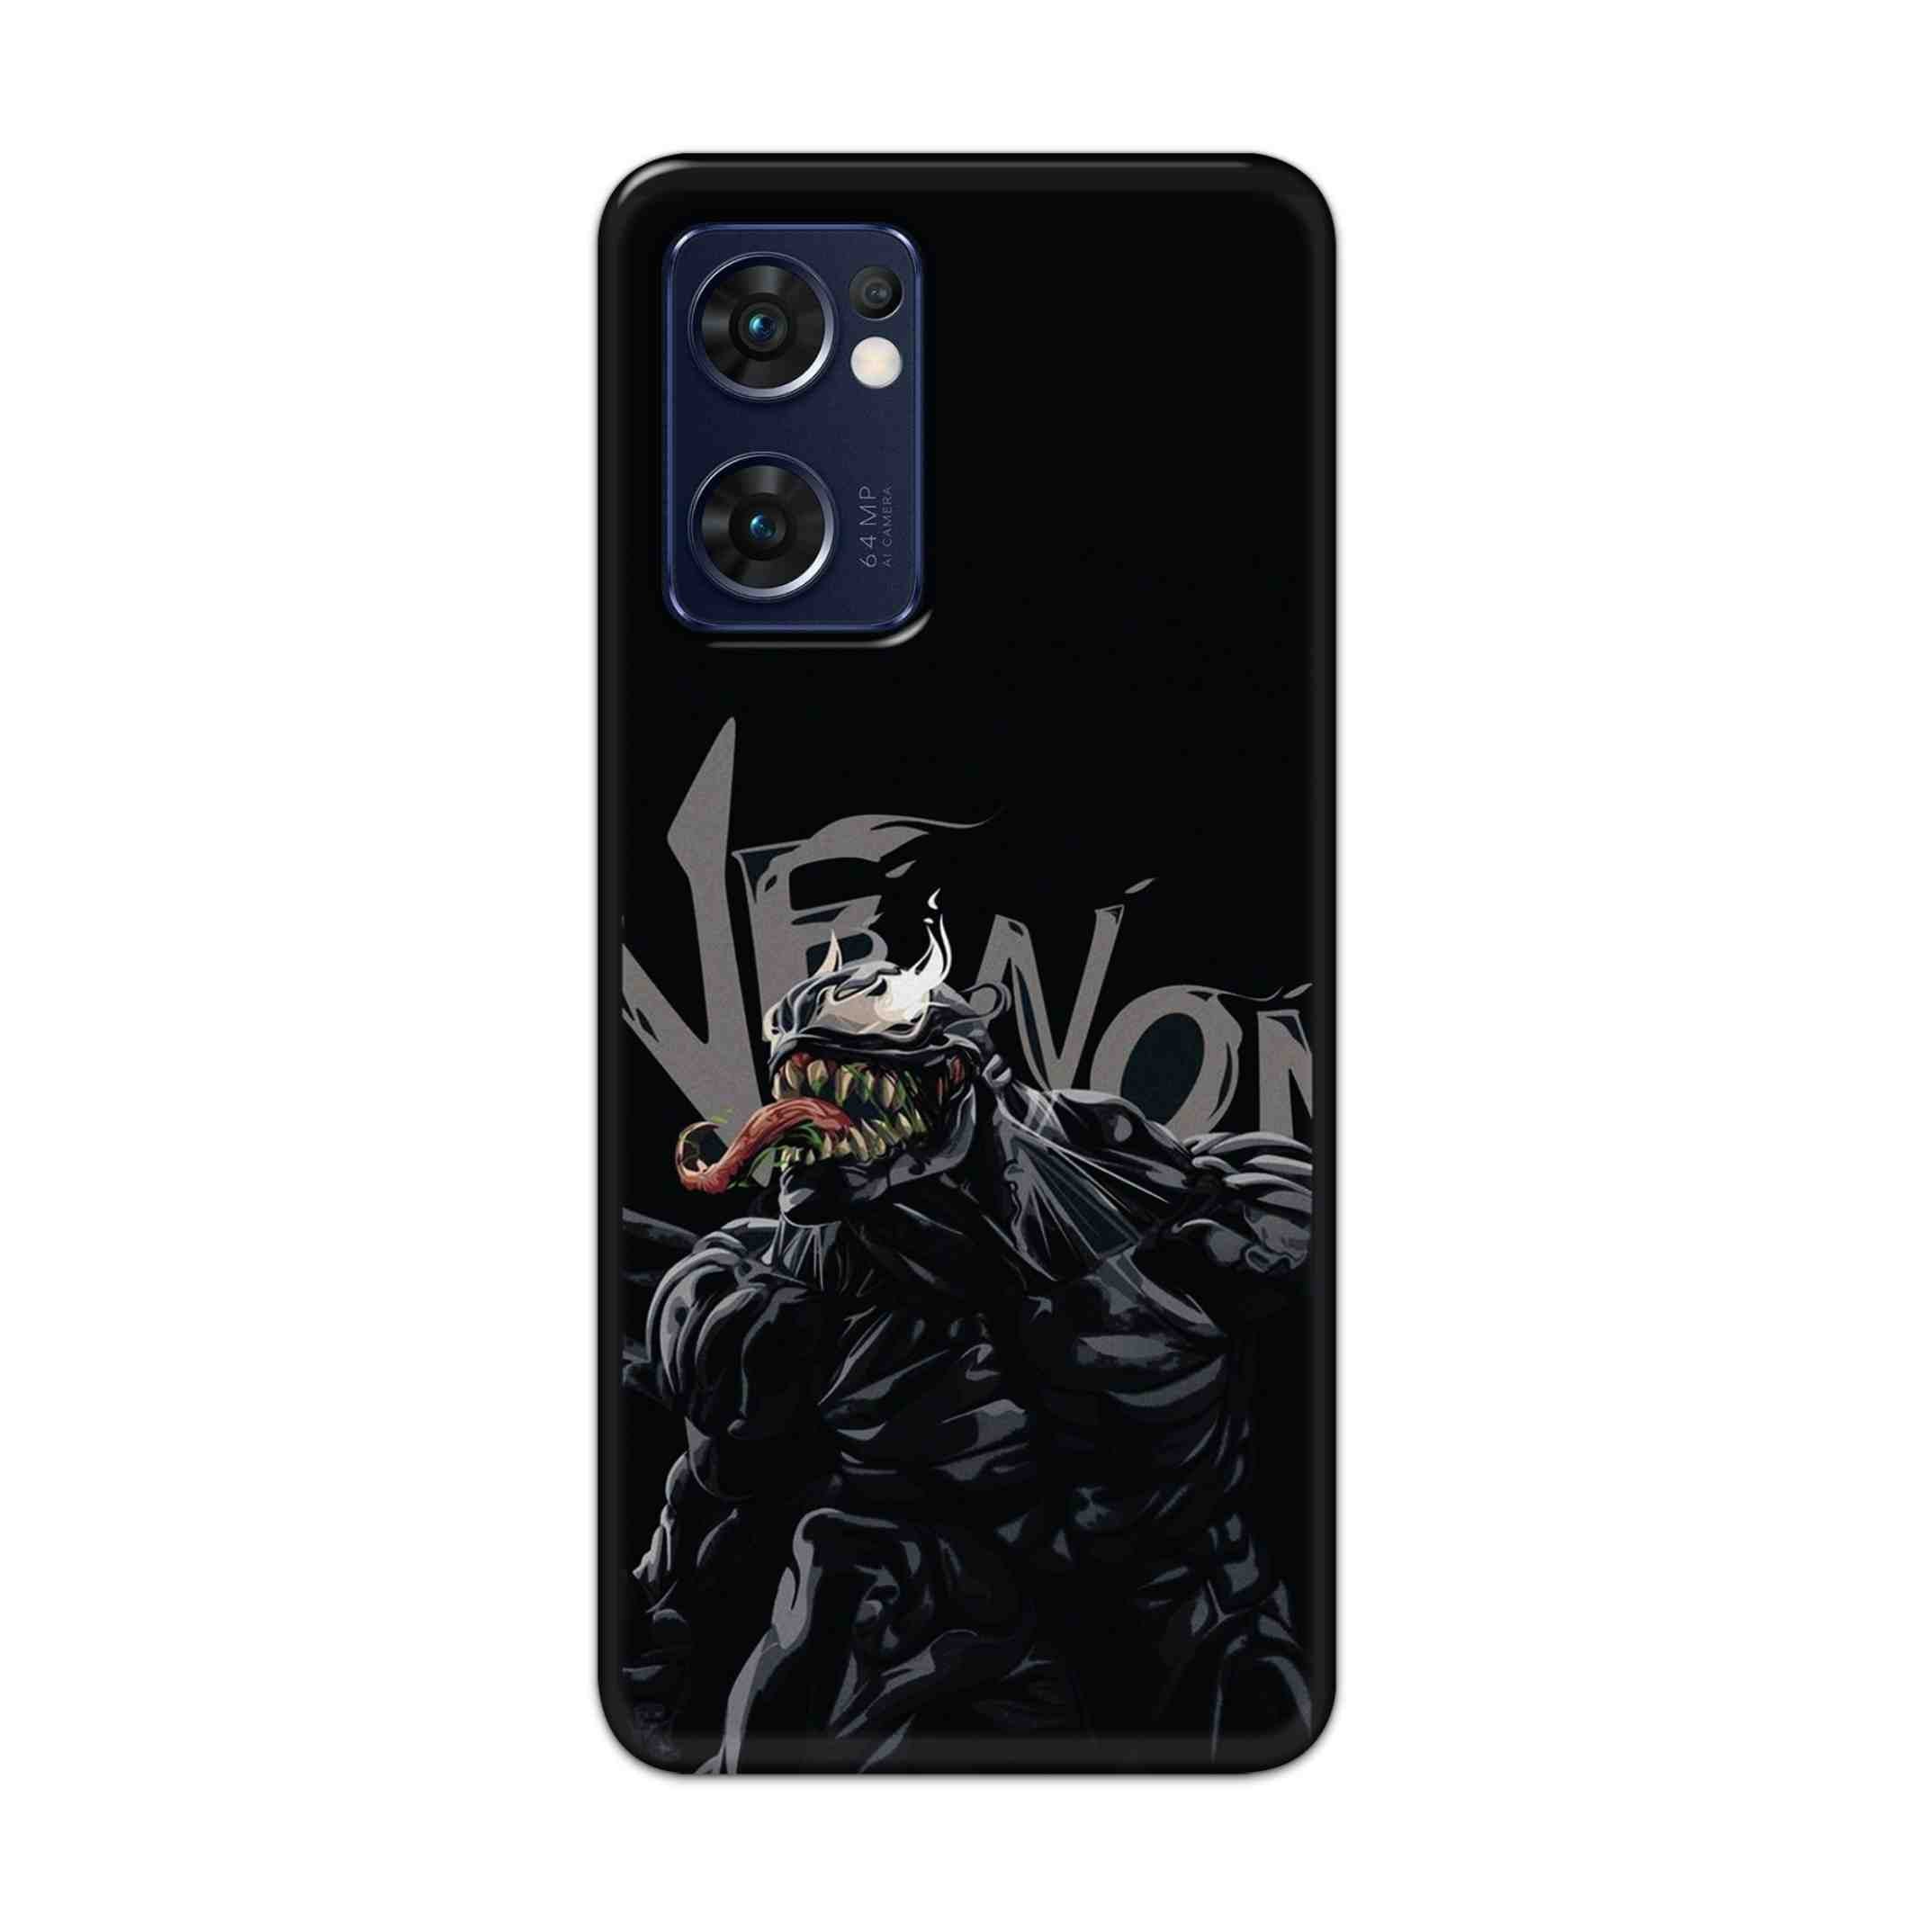 Buy  Venom Hard Back Mobile Phone Case Cover For Reno 7 5G Online